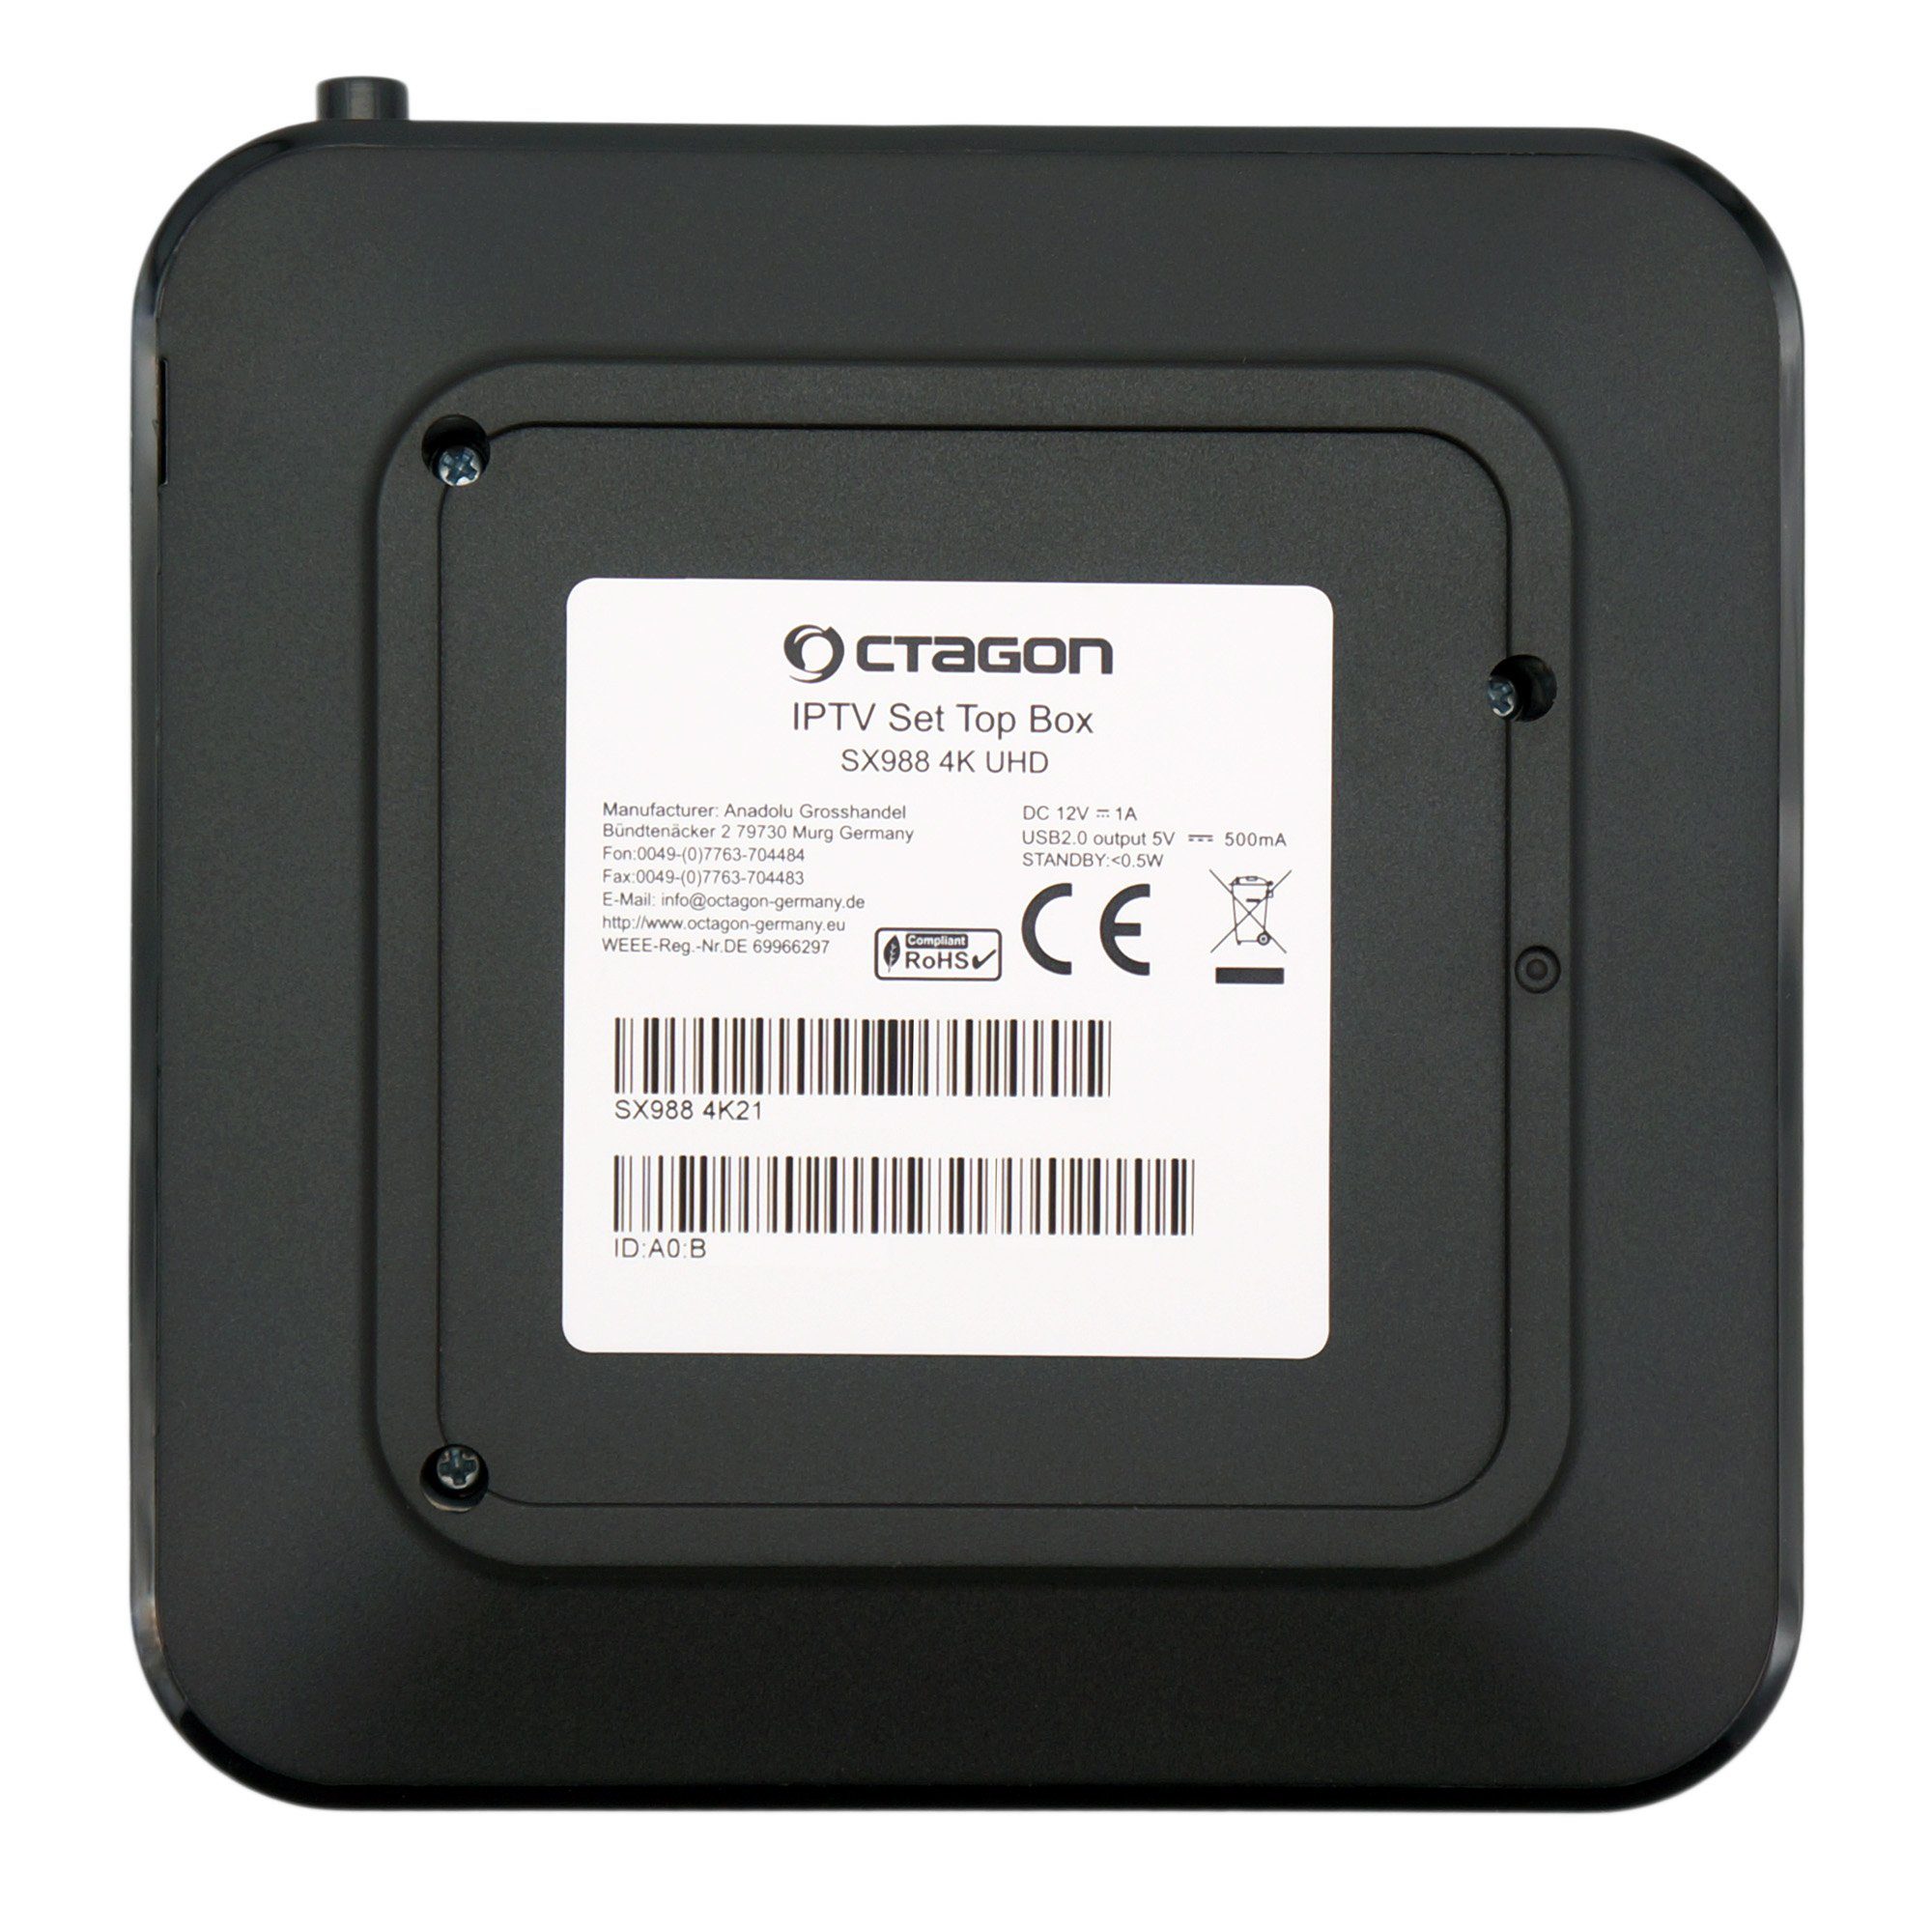 OCTAGON Streaming-Box SX988 4K UHD Smart H.265 IPTV Box TV Set-Top HEVC IP